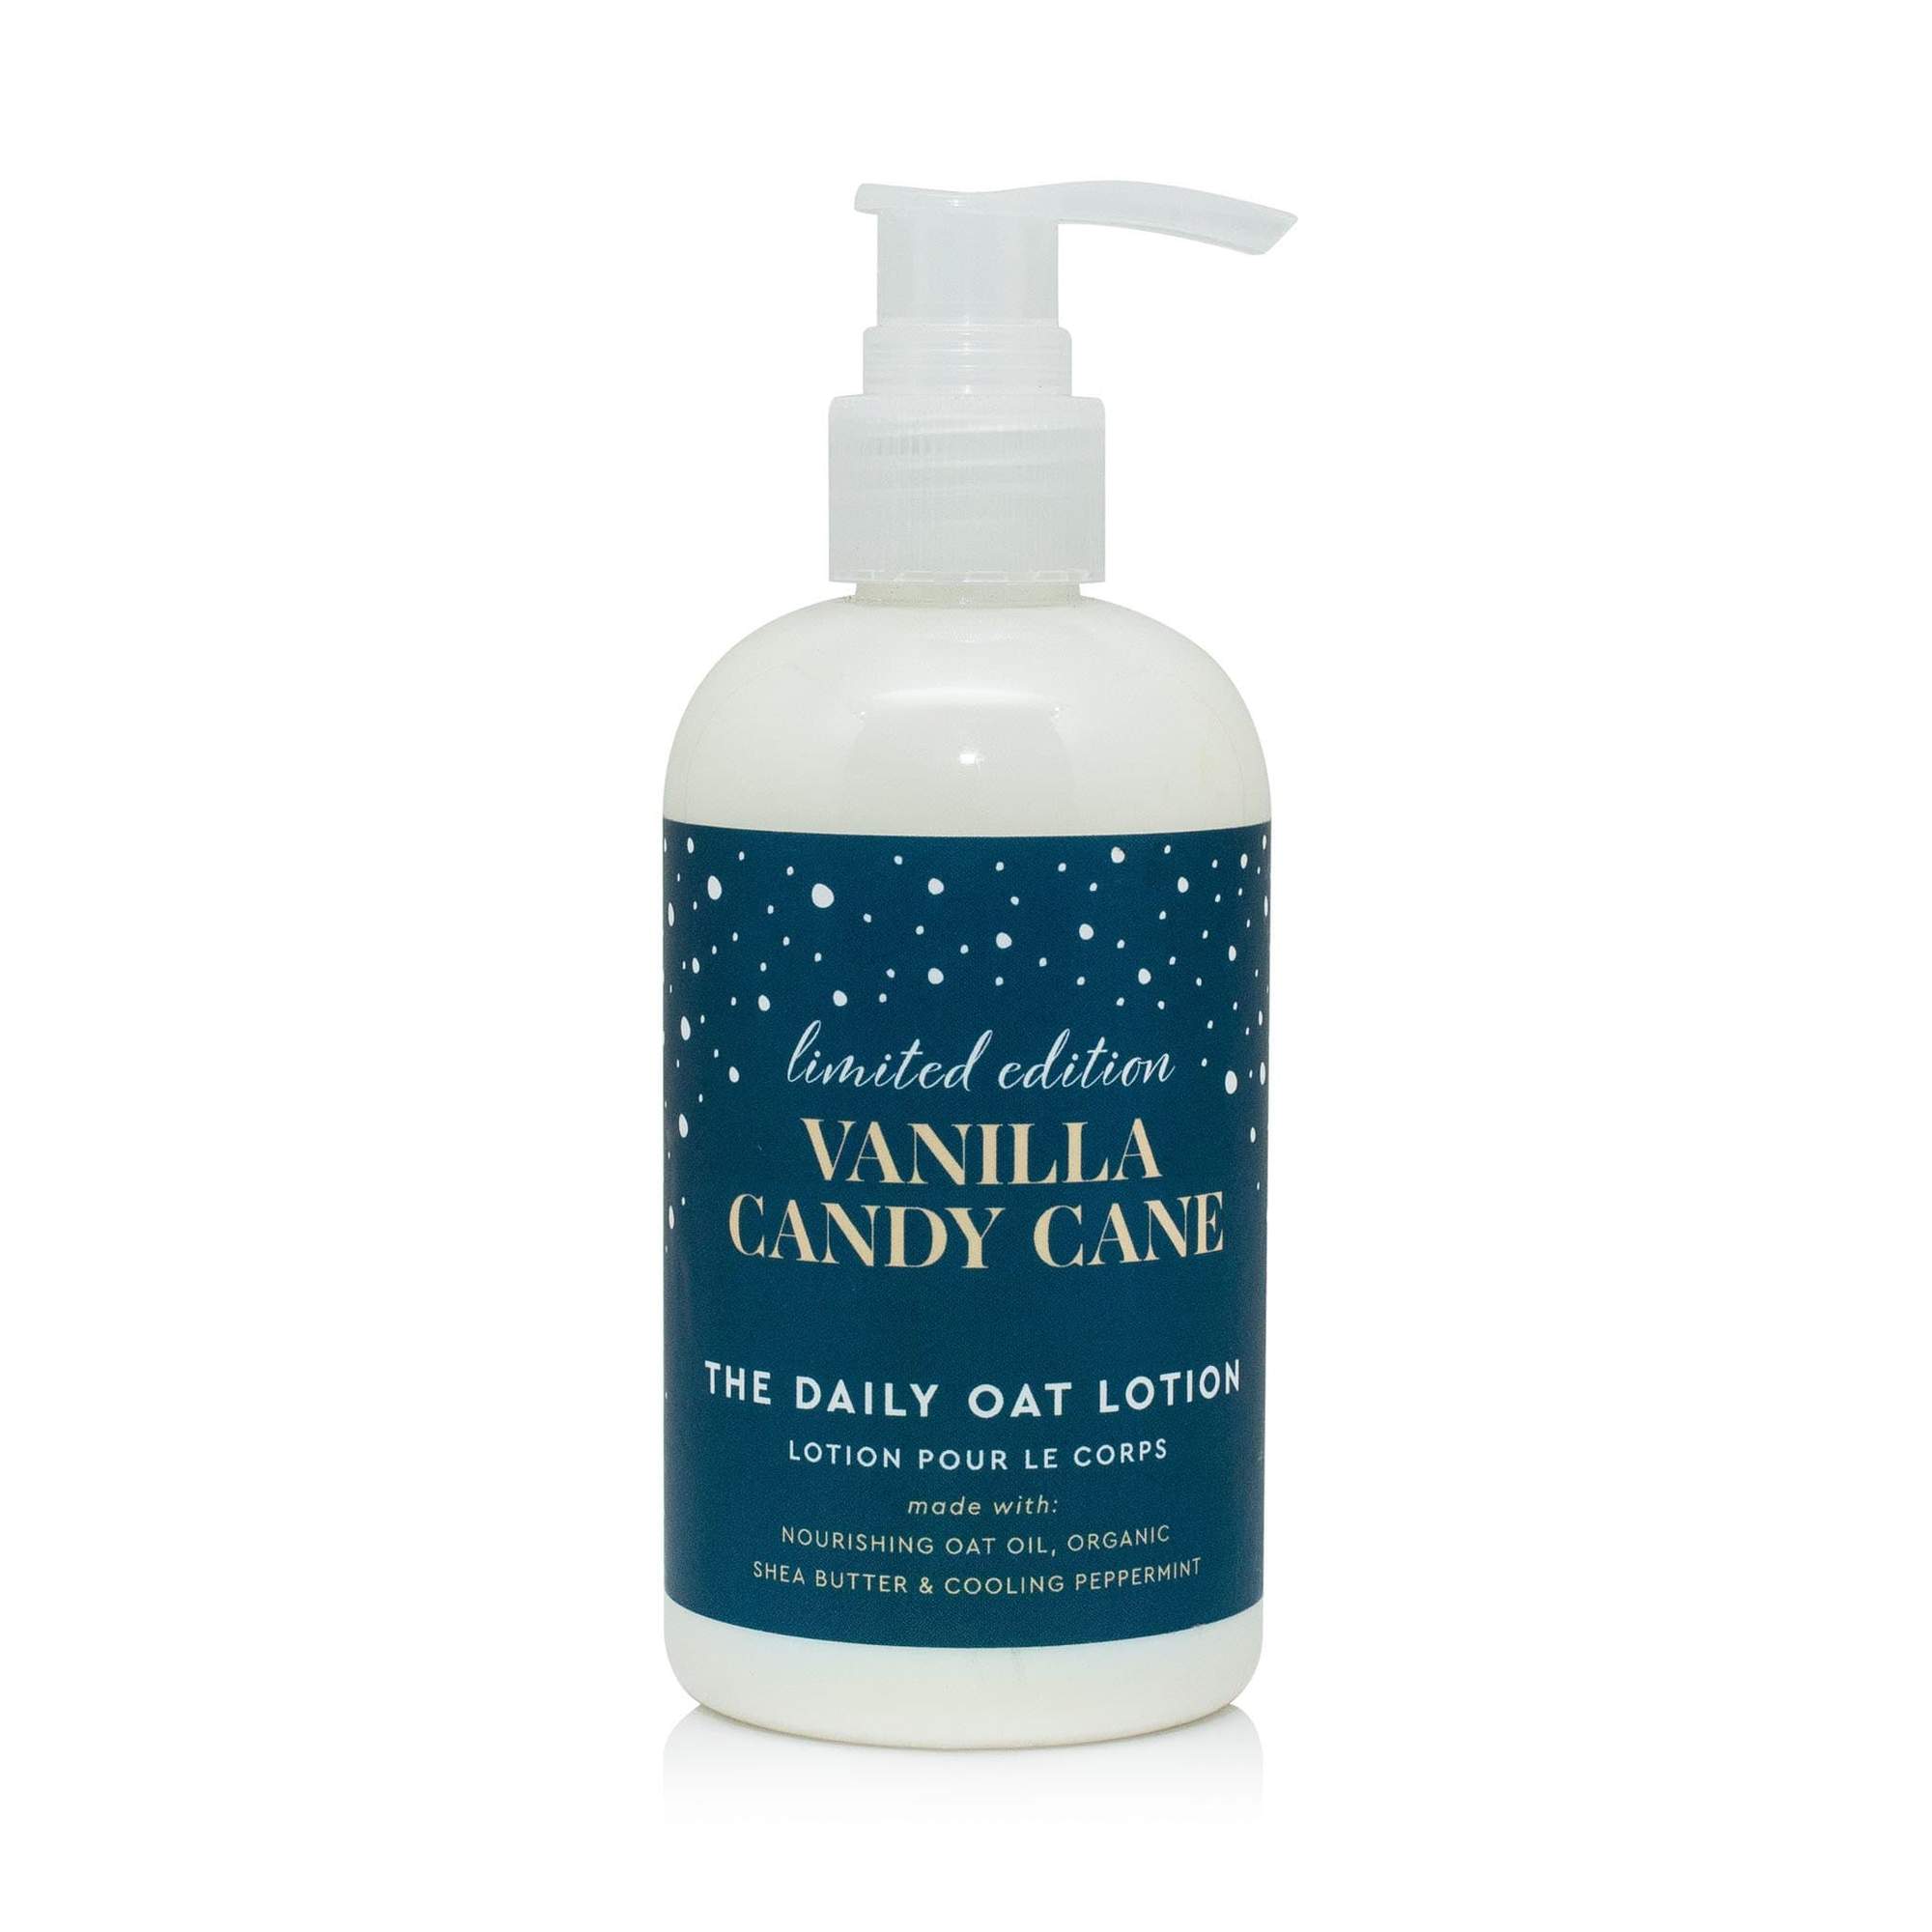 Vanilla Candy Cane Body Lotion